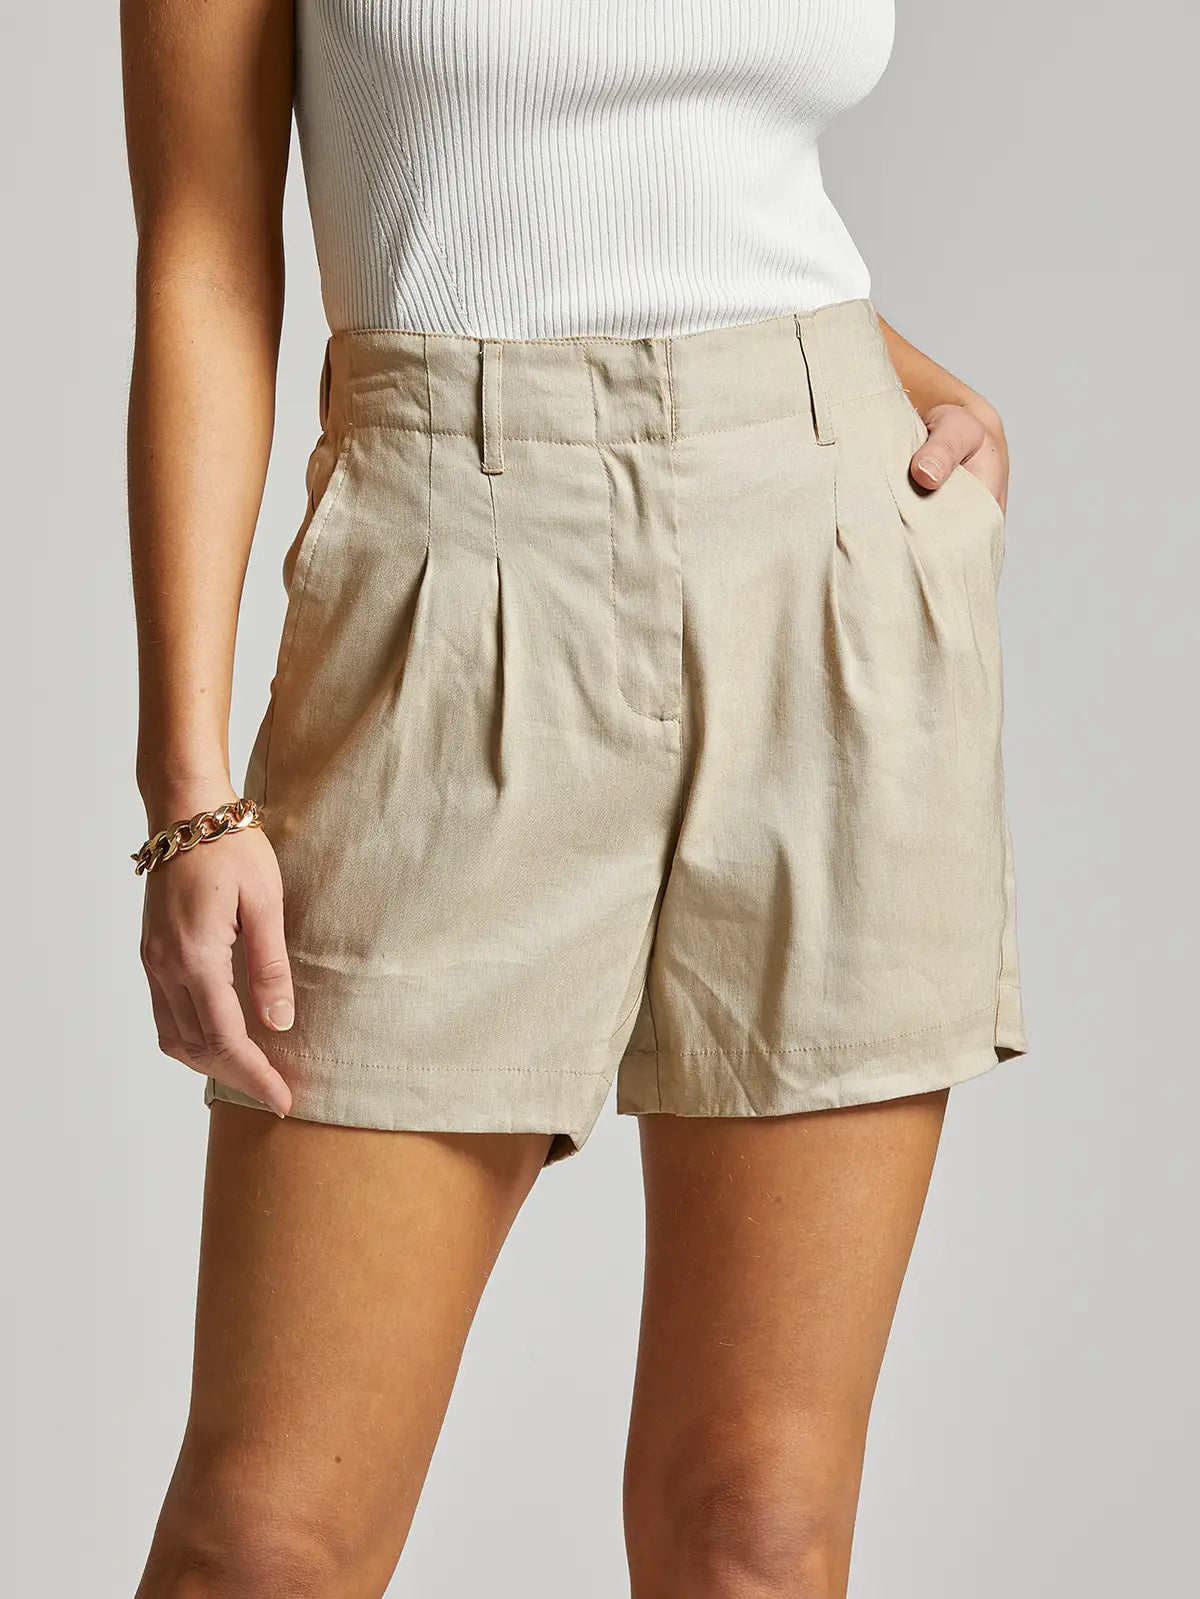 Savannah Linen Tan Shorts